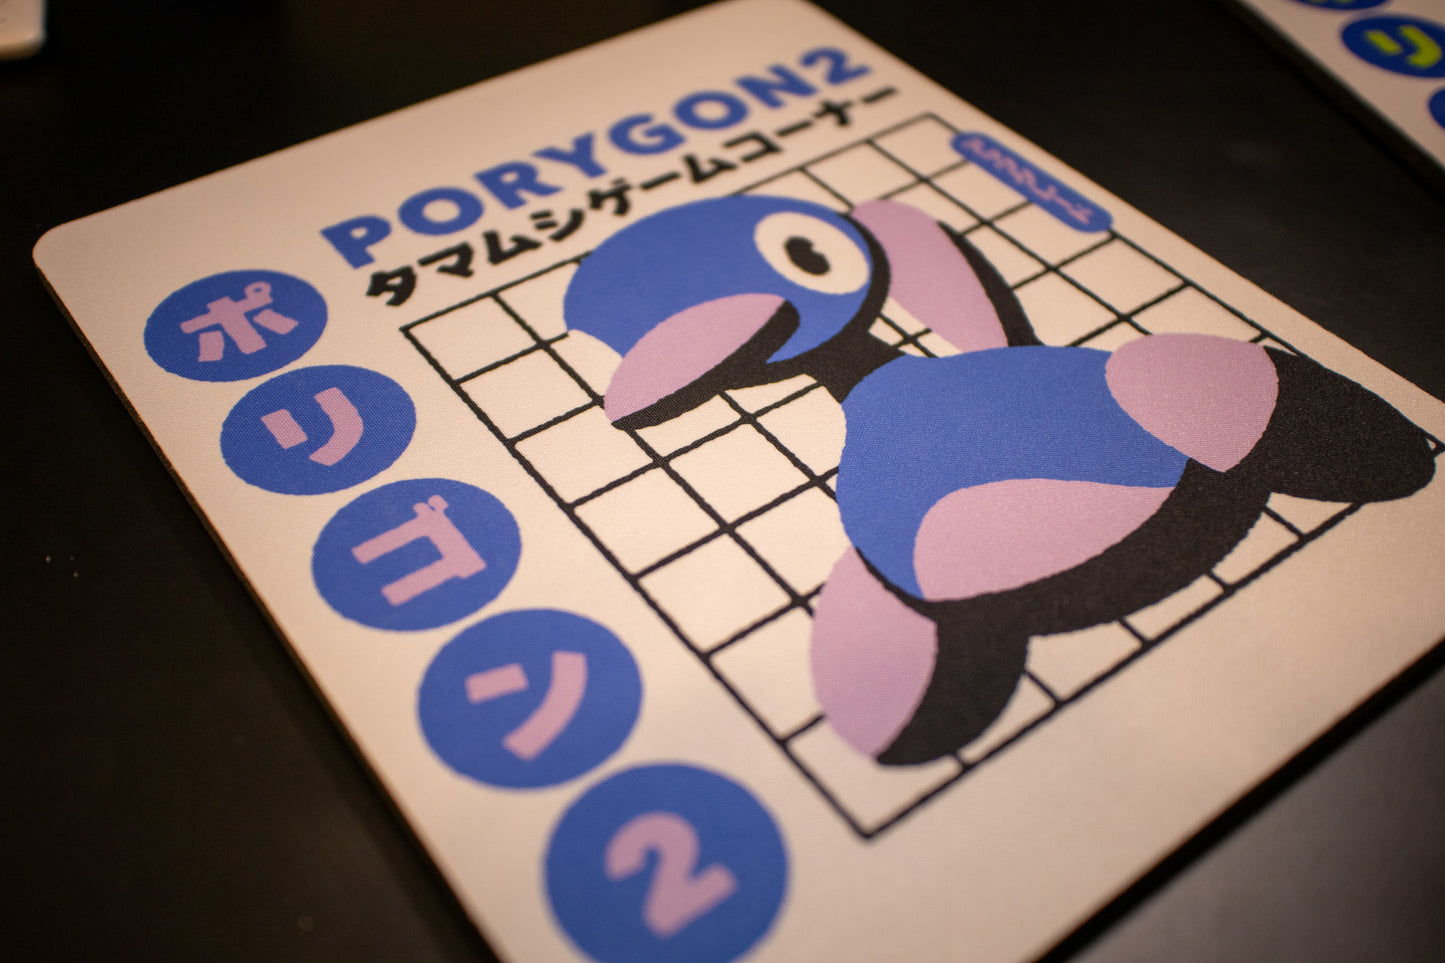 Shiny Porygon2 Advertisement Mouse Pad